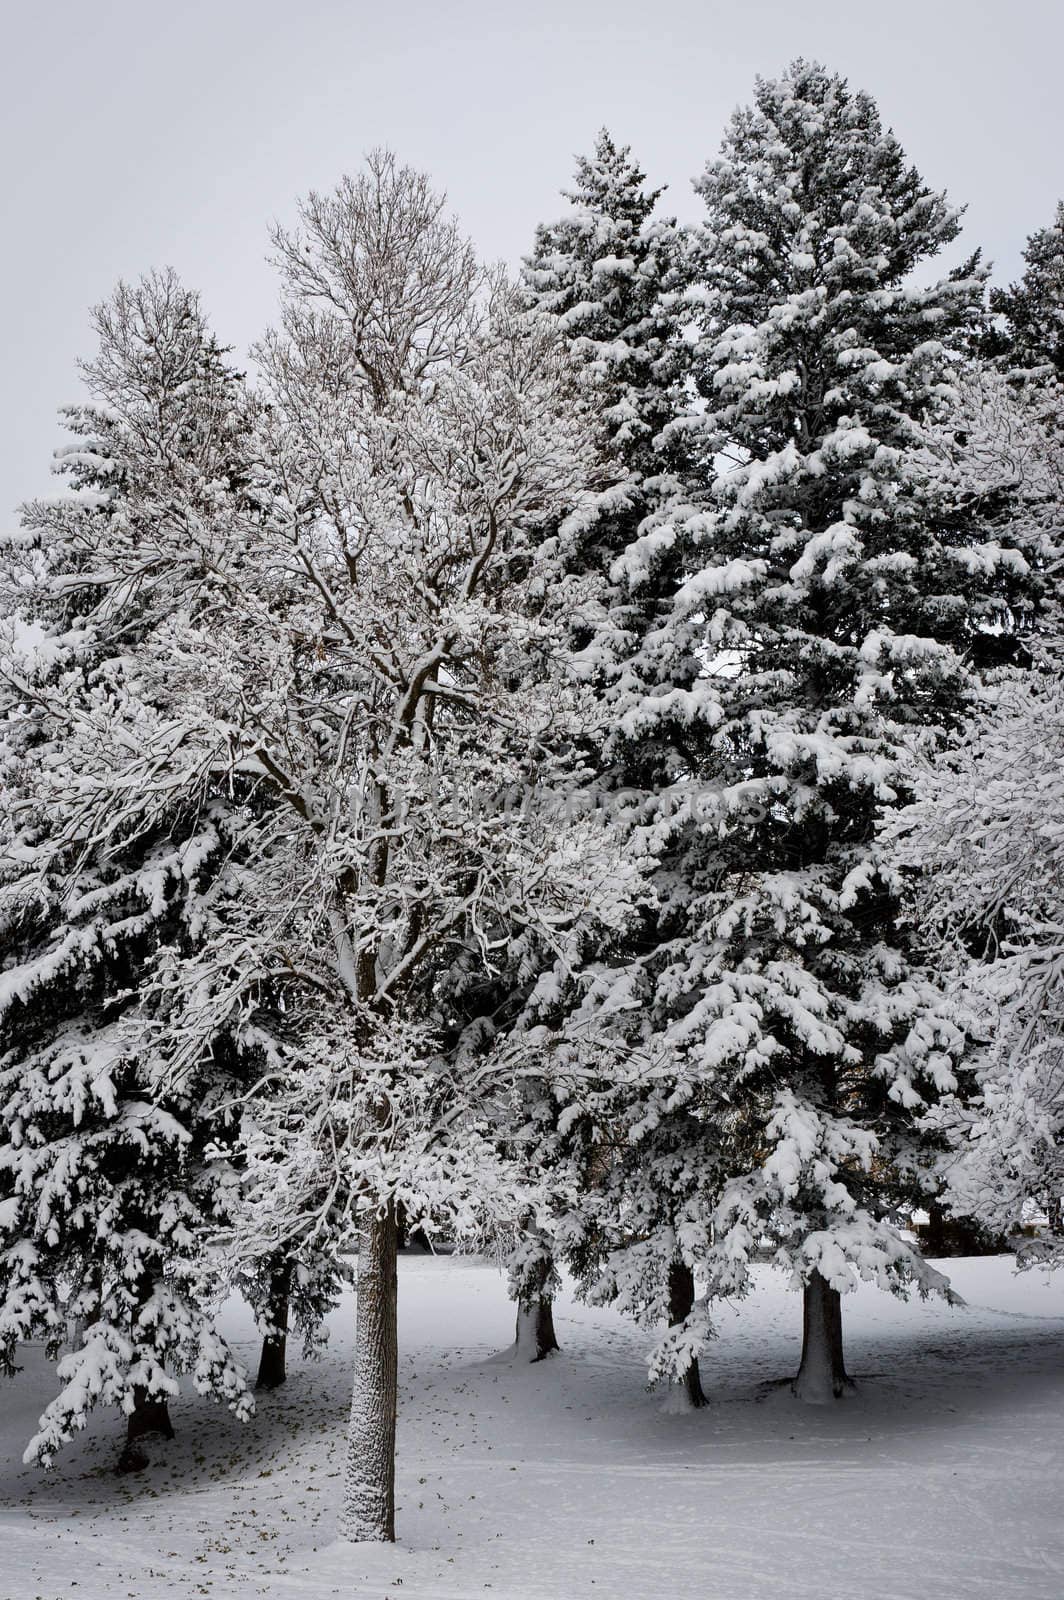 Snow covered trees, Lindley Park, Bozeman, Montana, USA by CharlesBolin